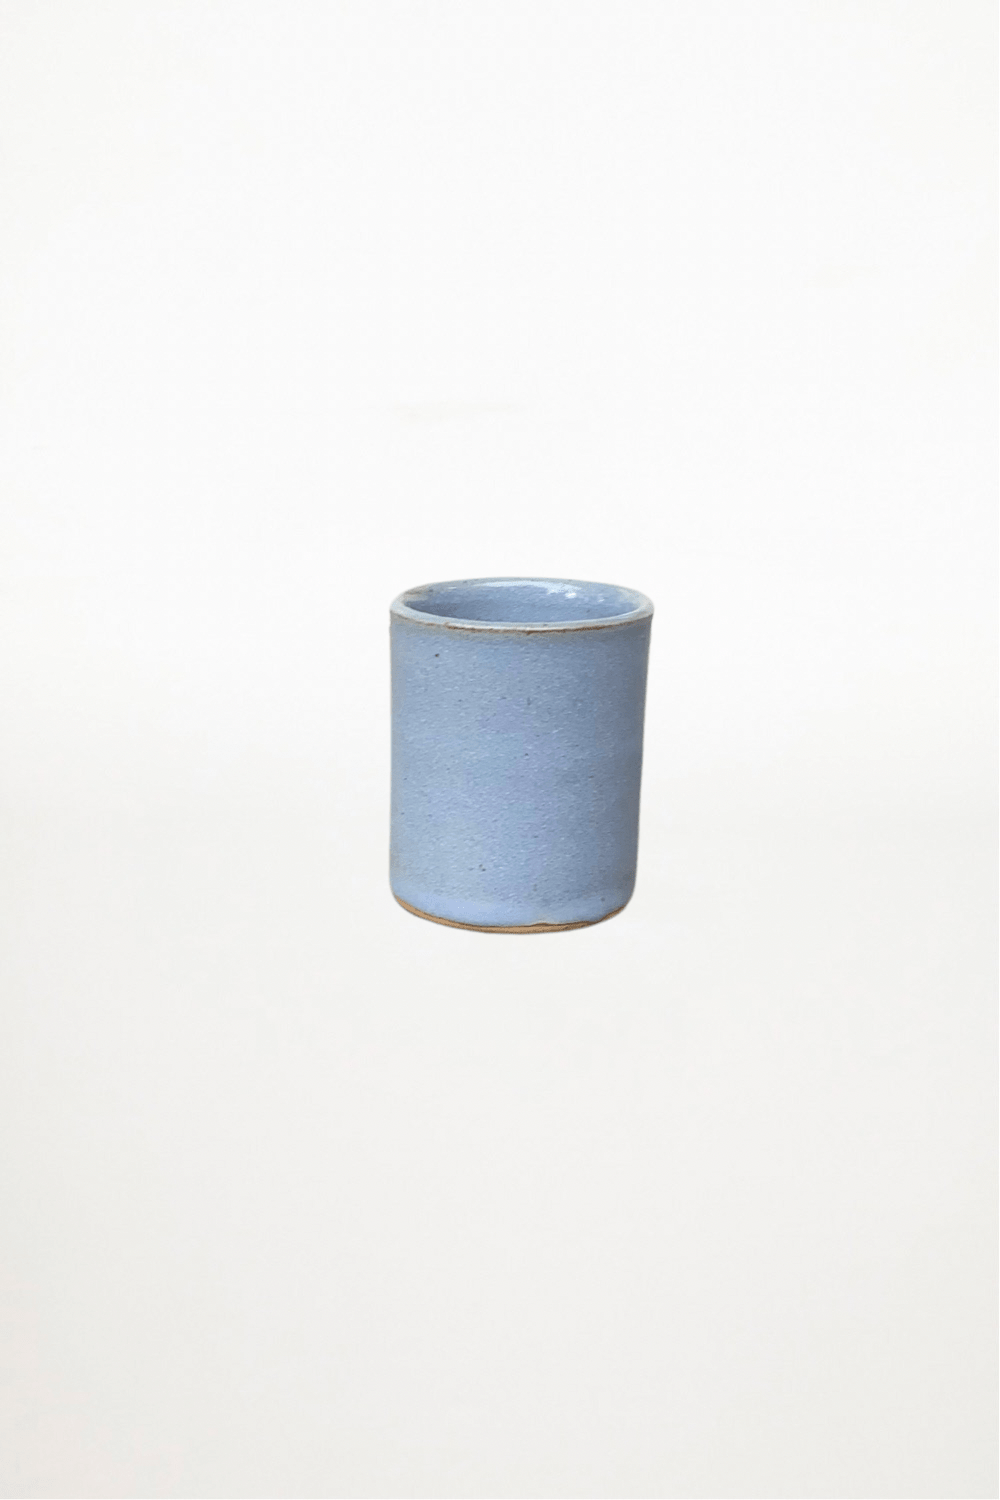 Bennetts Pottery - Cup - Lilac - Ensemble Studios